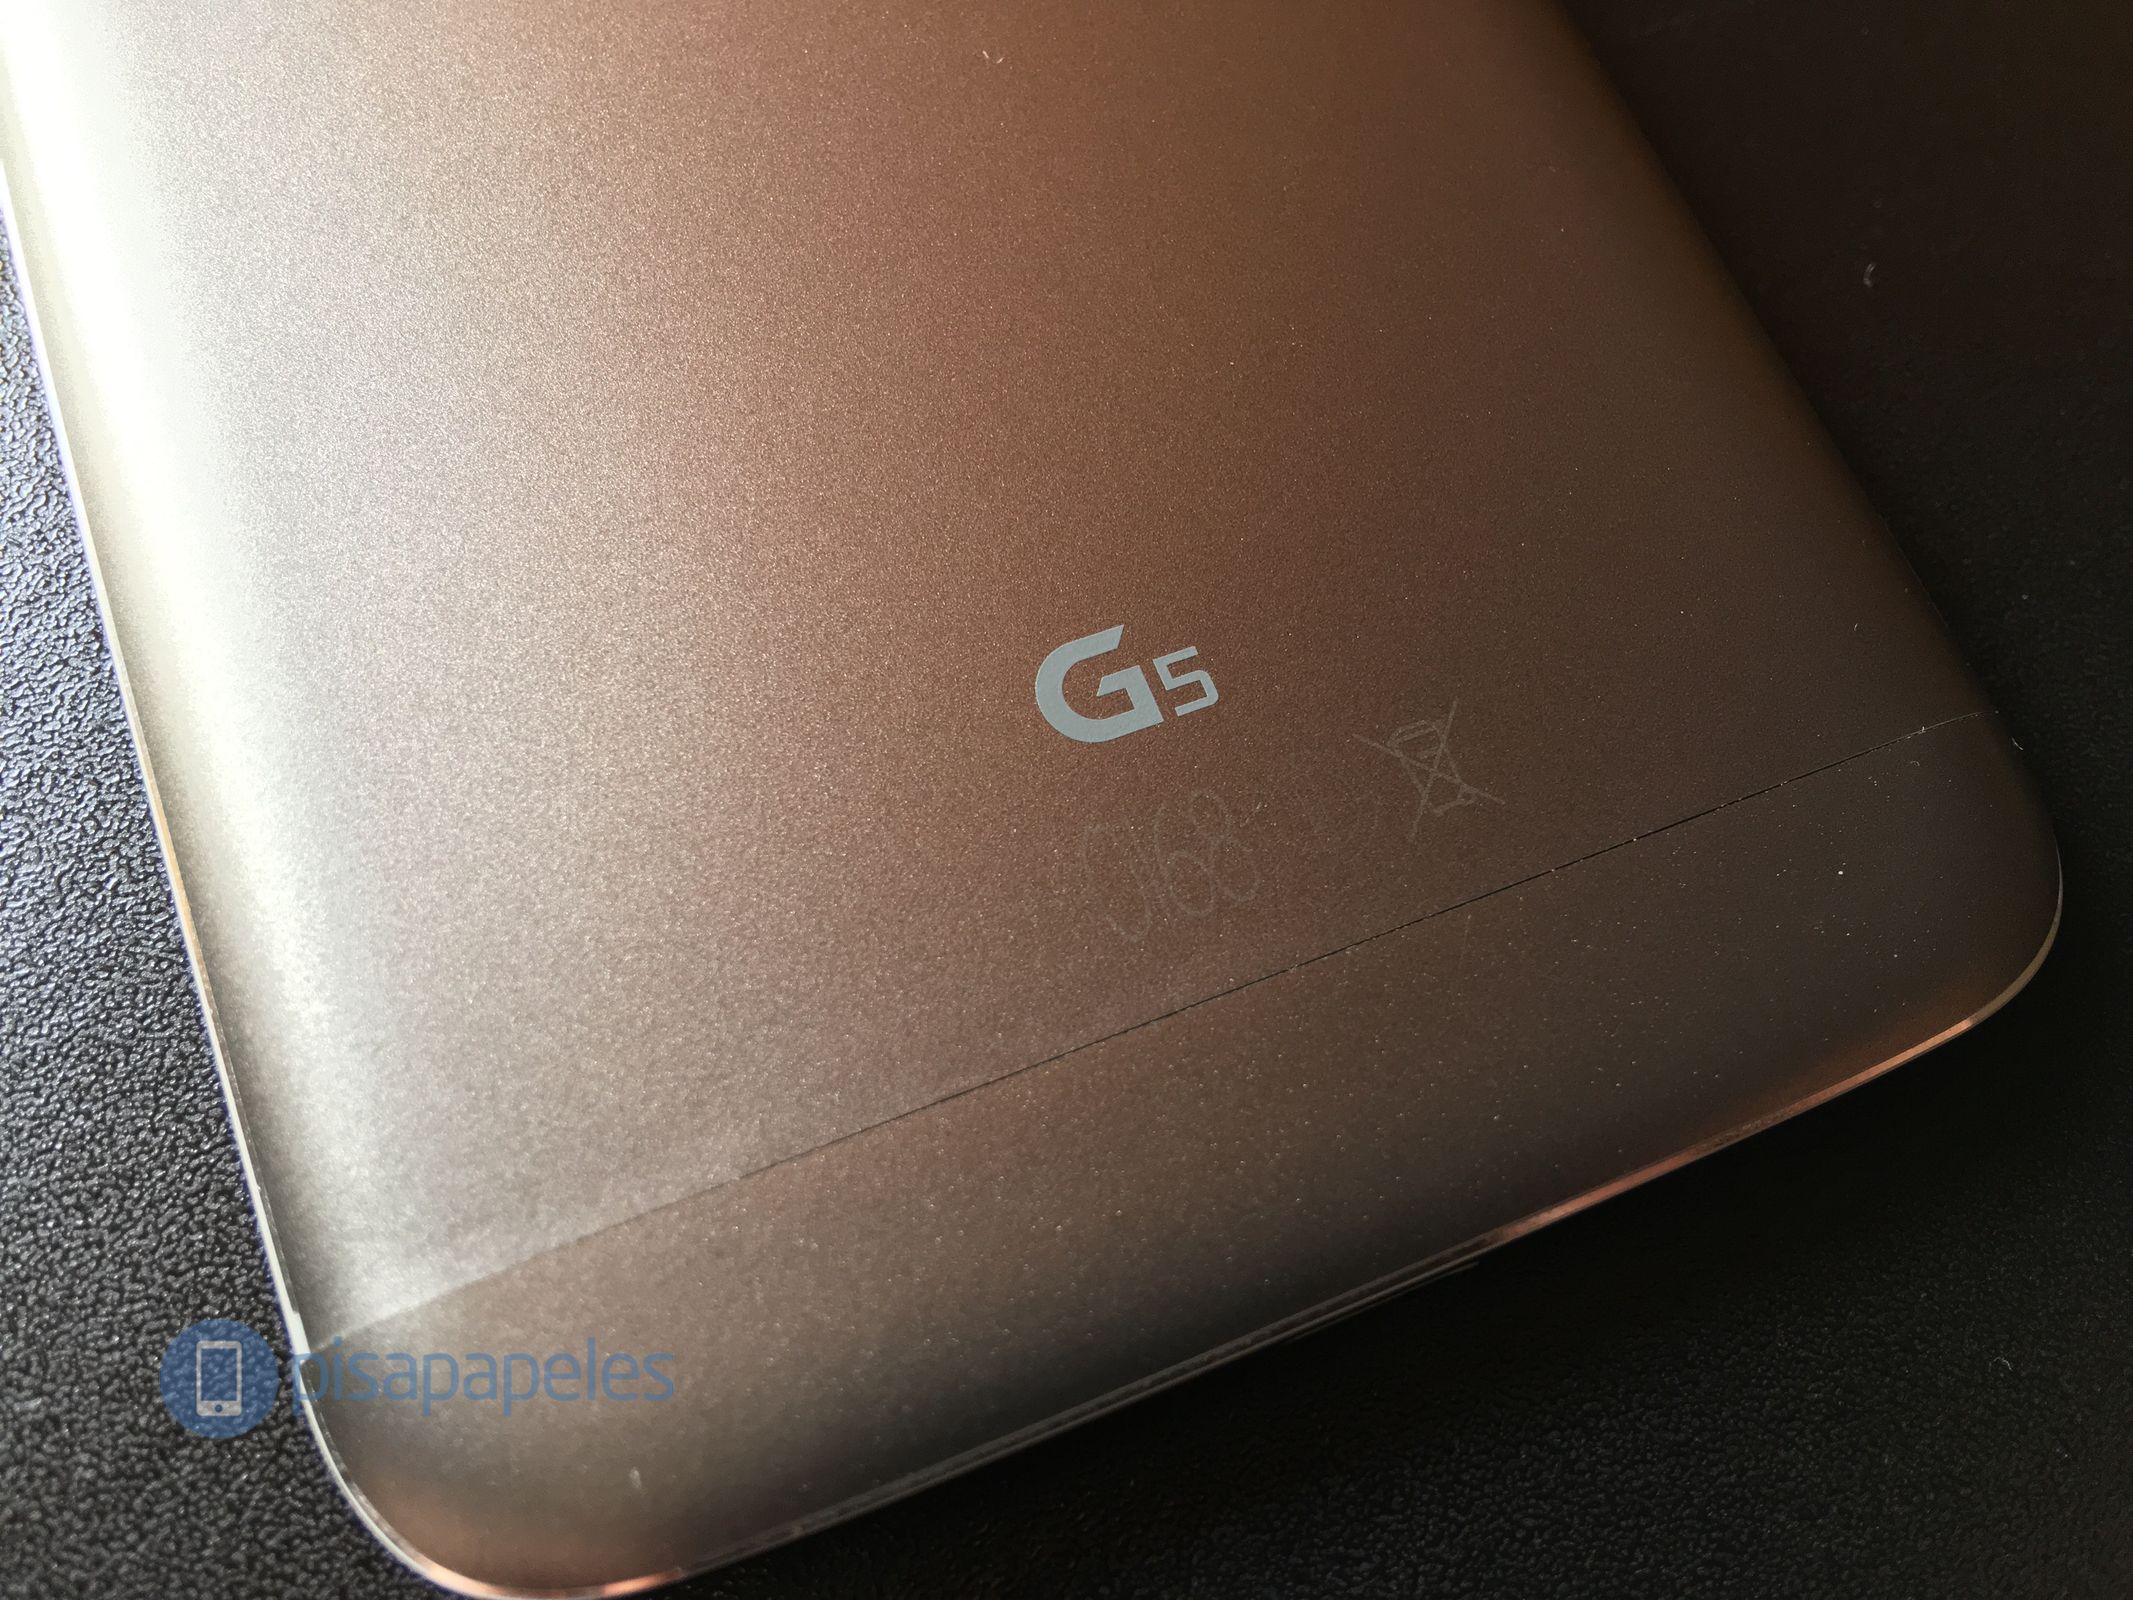 LG G5 PISAPAPELES.NET_1 "width =" 2133 "height =" 1600